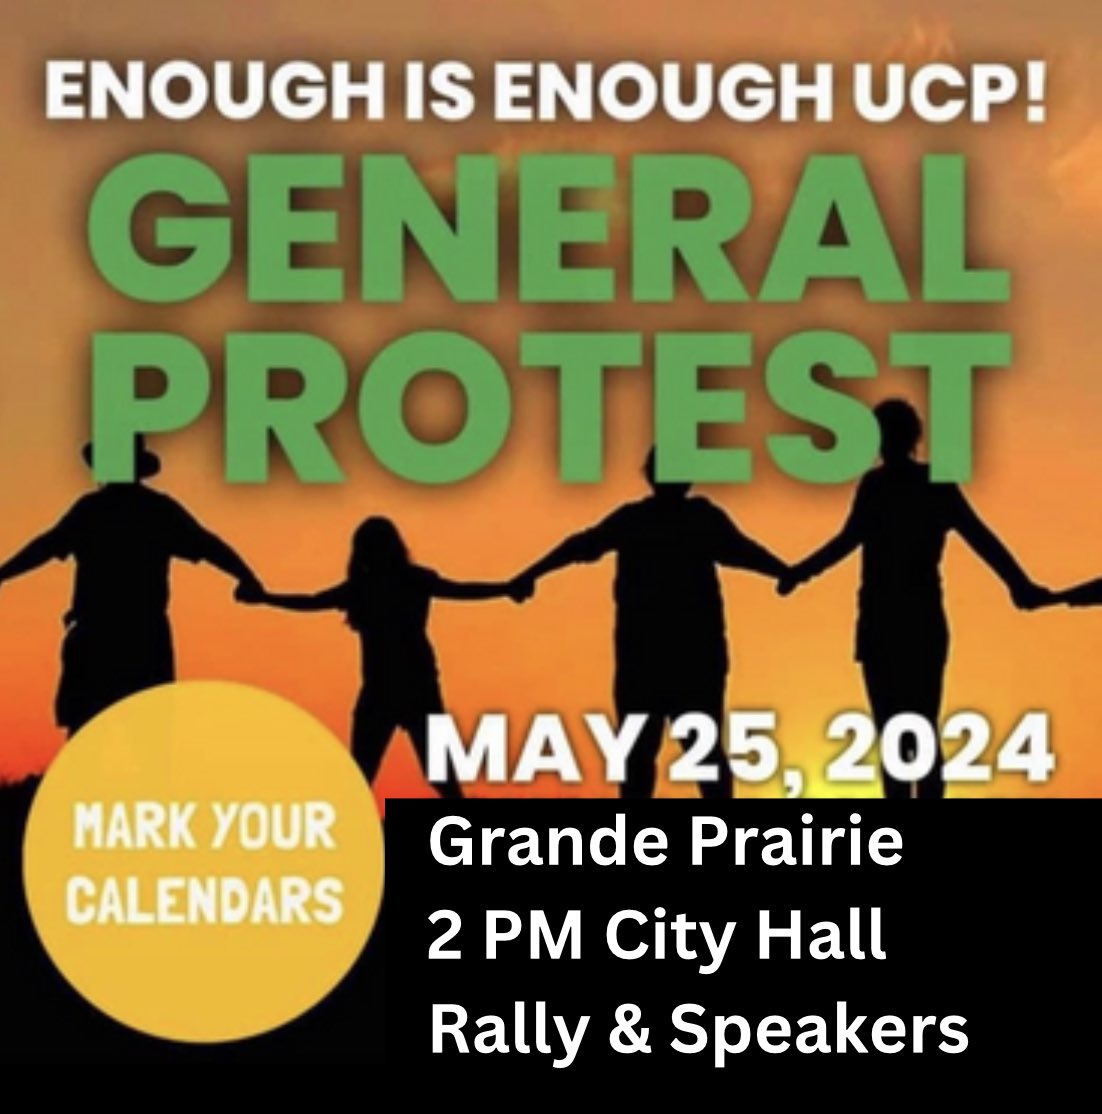 Save the date for the local Grande Prairie rally ⬇️⬇️⬇️ #enoughisenoughUCP